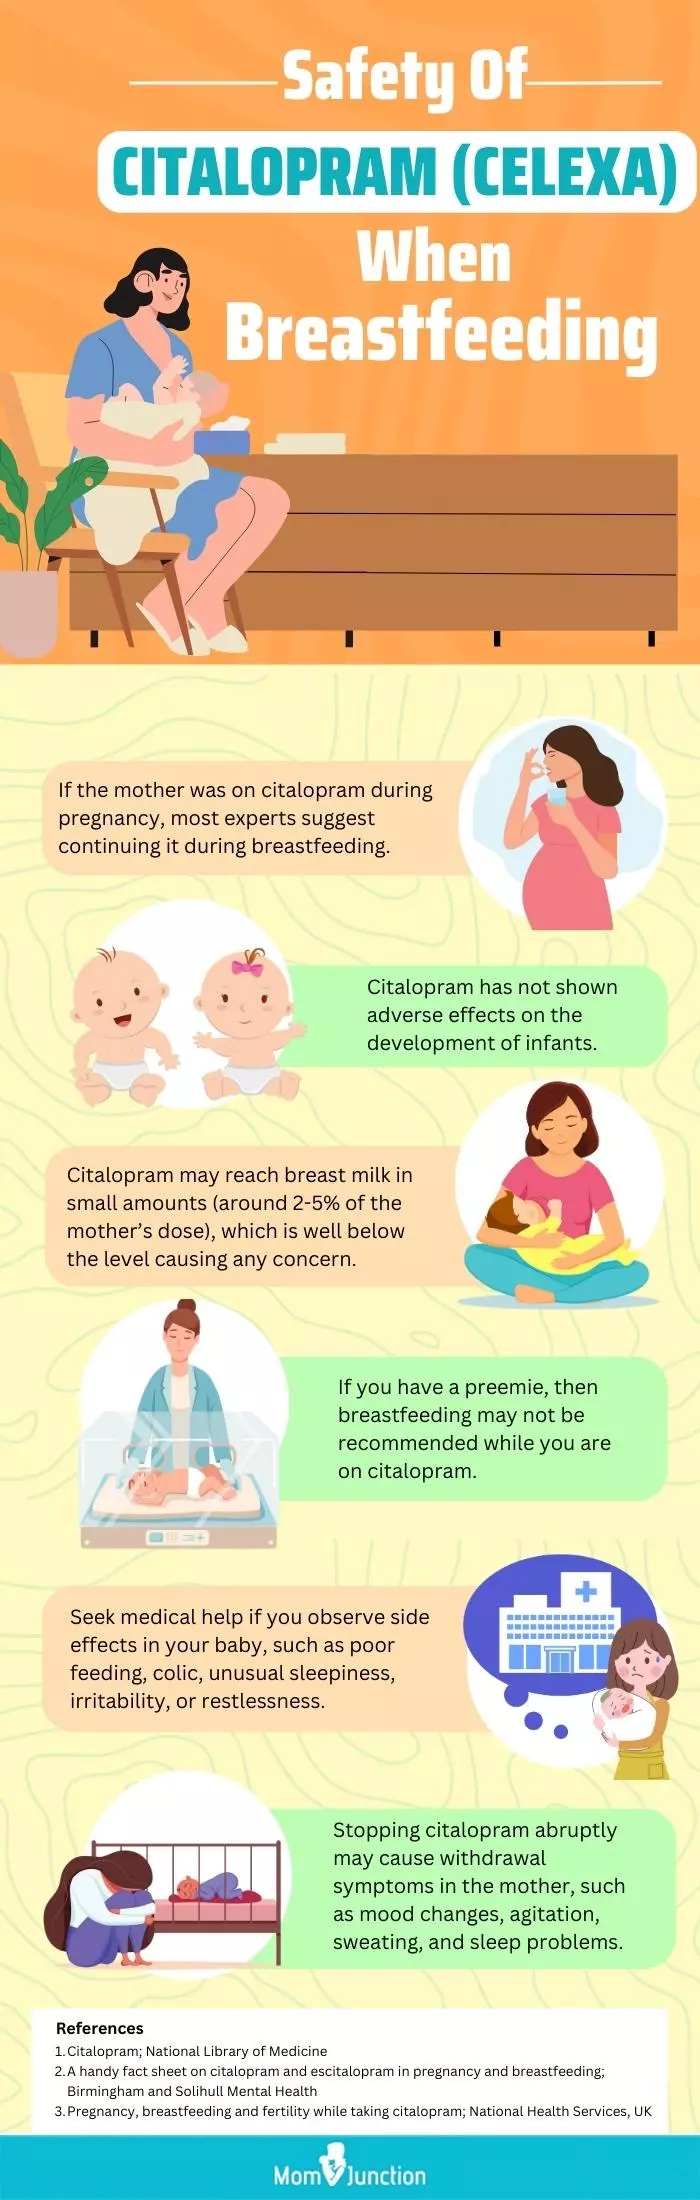 safety of citalopram (celexa) when breastfeeding (infographic)